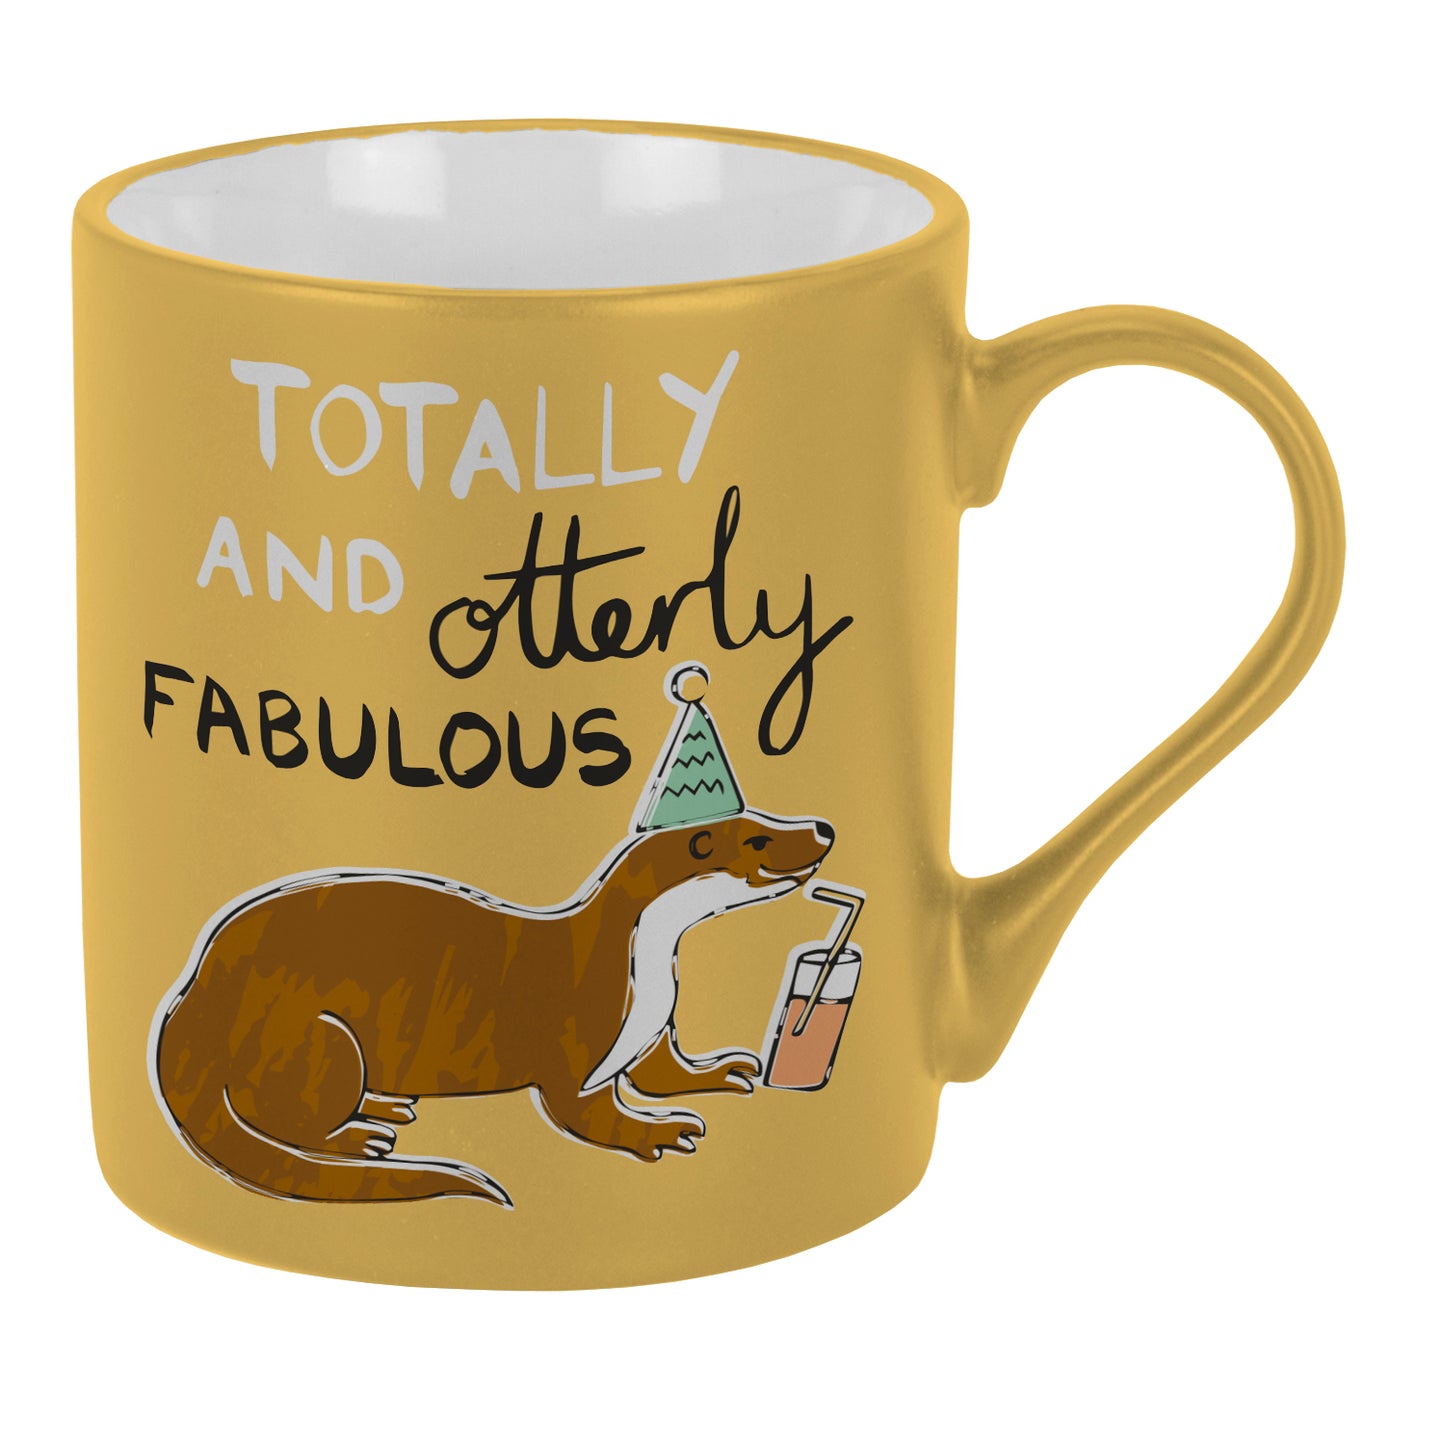 Totally and Otterly Fabulous Mug